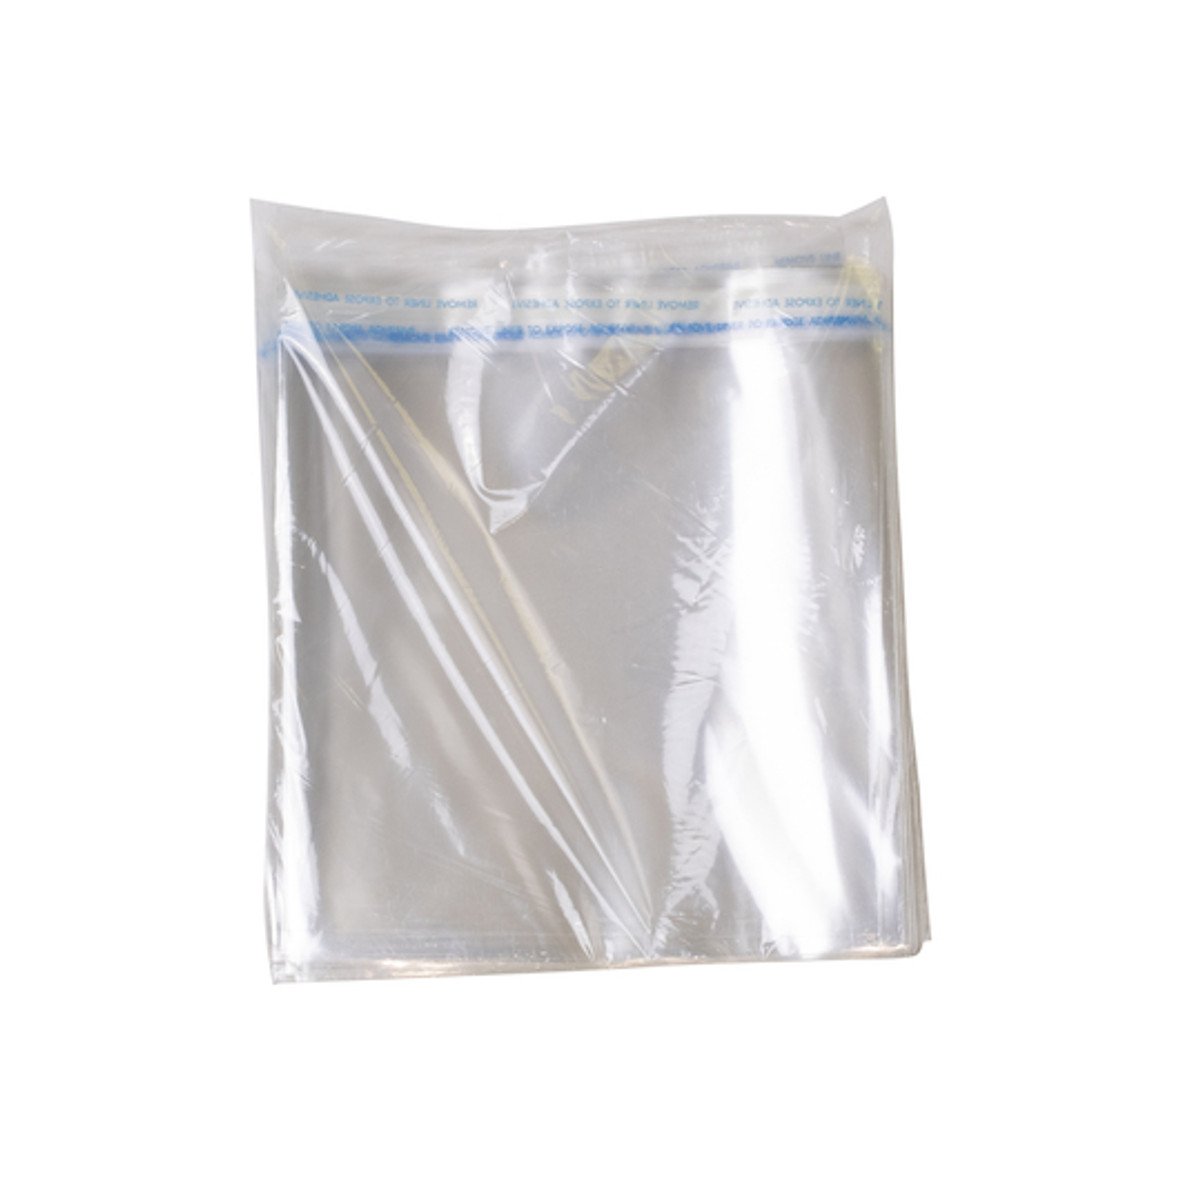 Tuffgards High Clarity Polypropylene Flat Stack Adhesive Strip Sealable Food Storage Bag, 7 x 7-inch 1000 Per Case